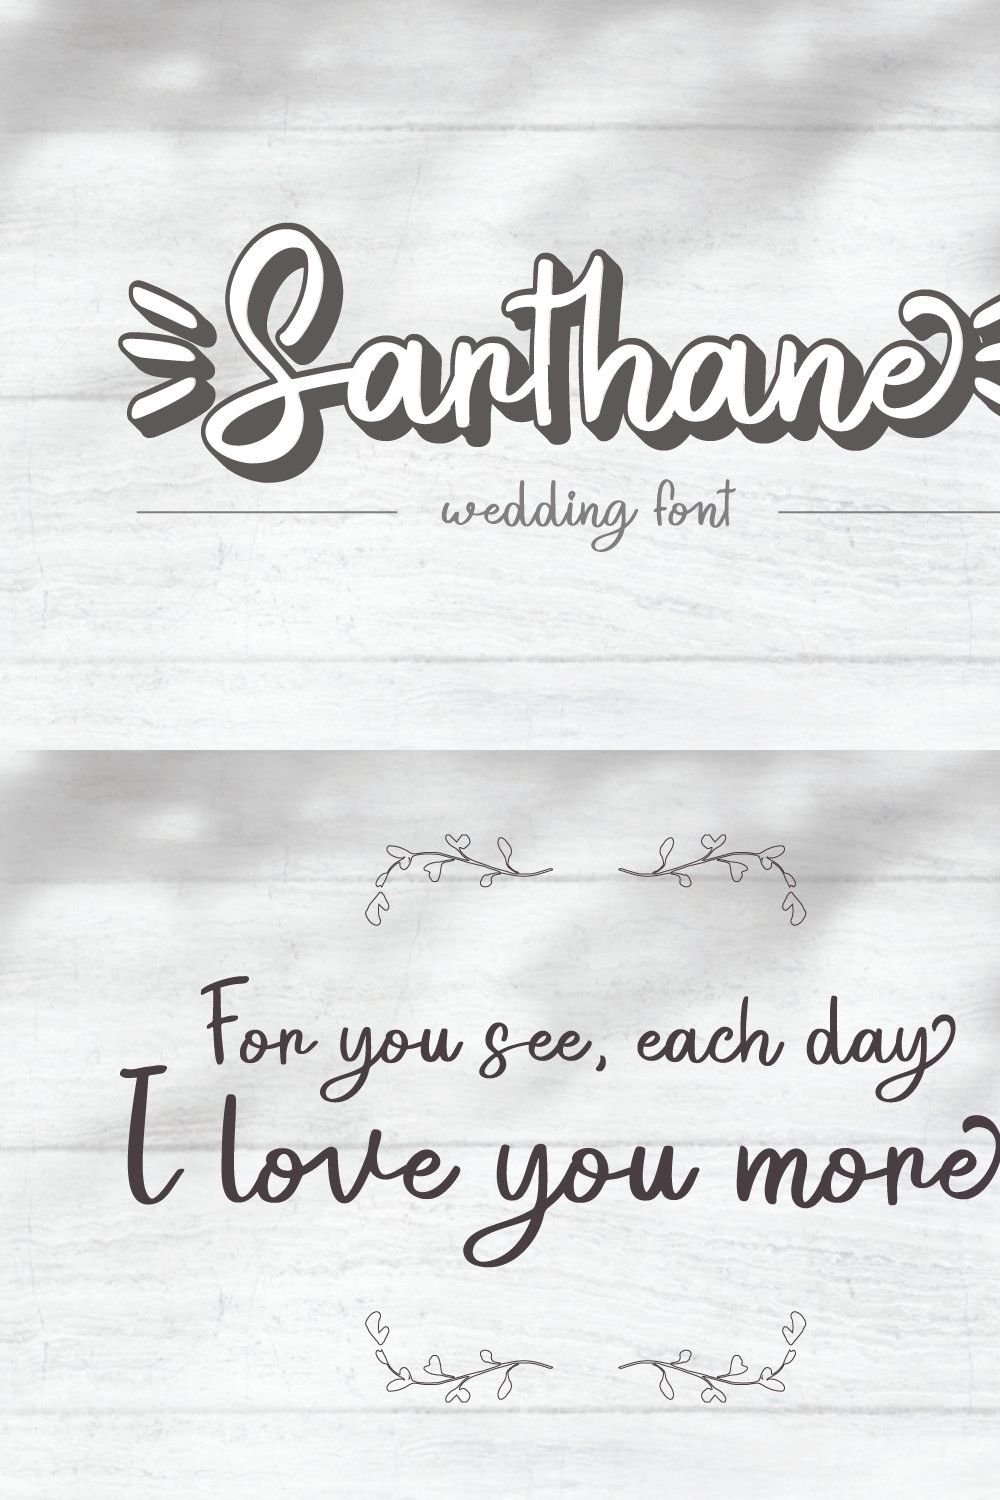 Sarthane - Wedding Font pinterest preview image.